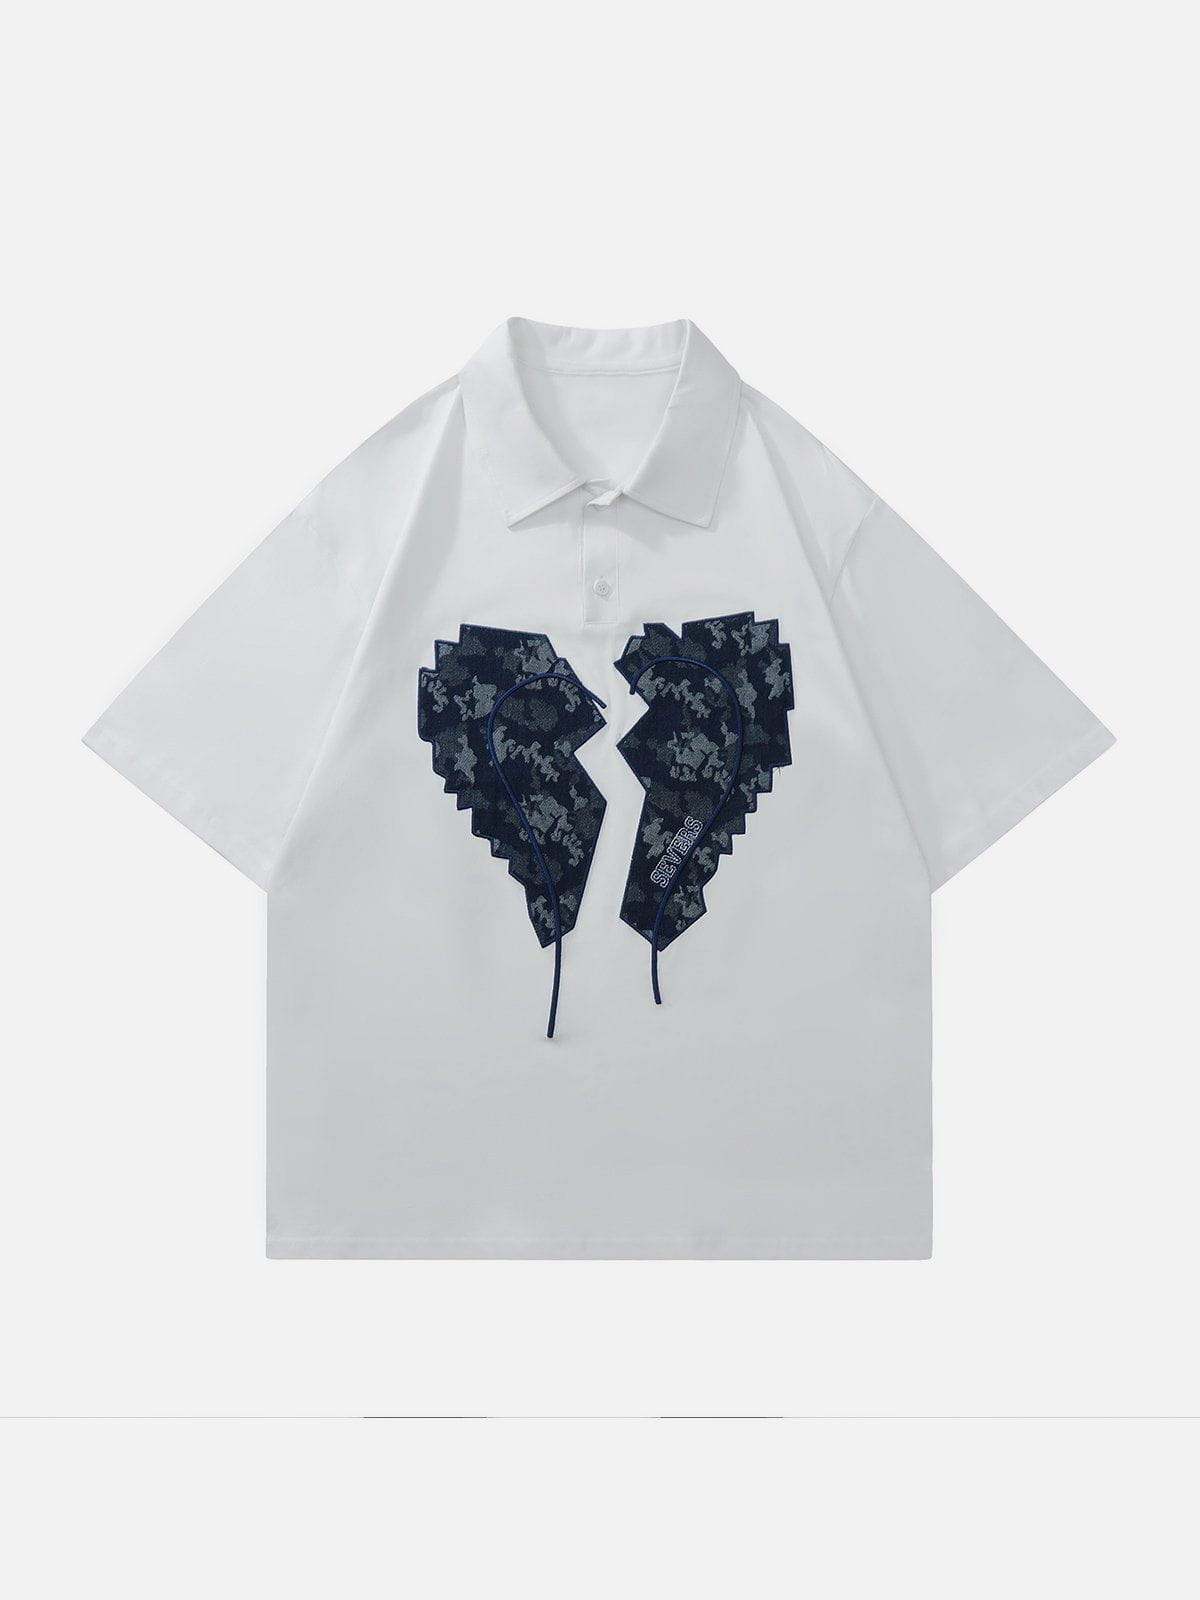 Majesda® - Embroidery Split Heart Short Sleeve Shirts outfit ideas streetwear fashion